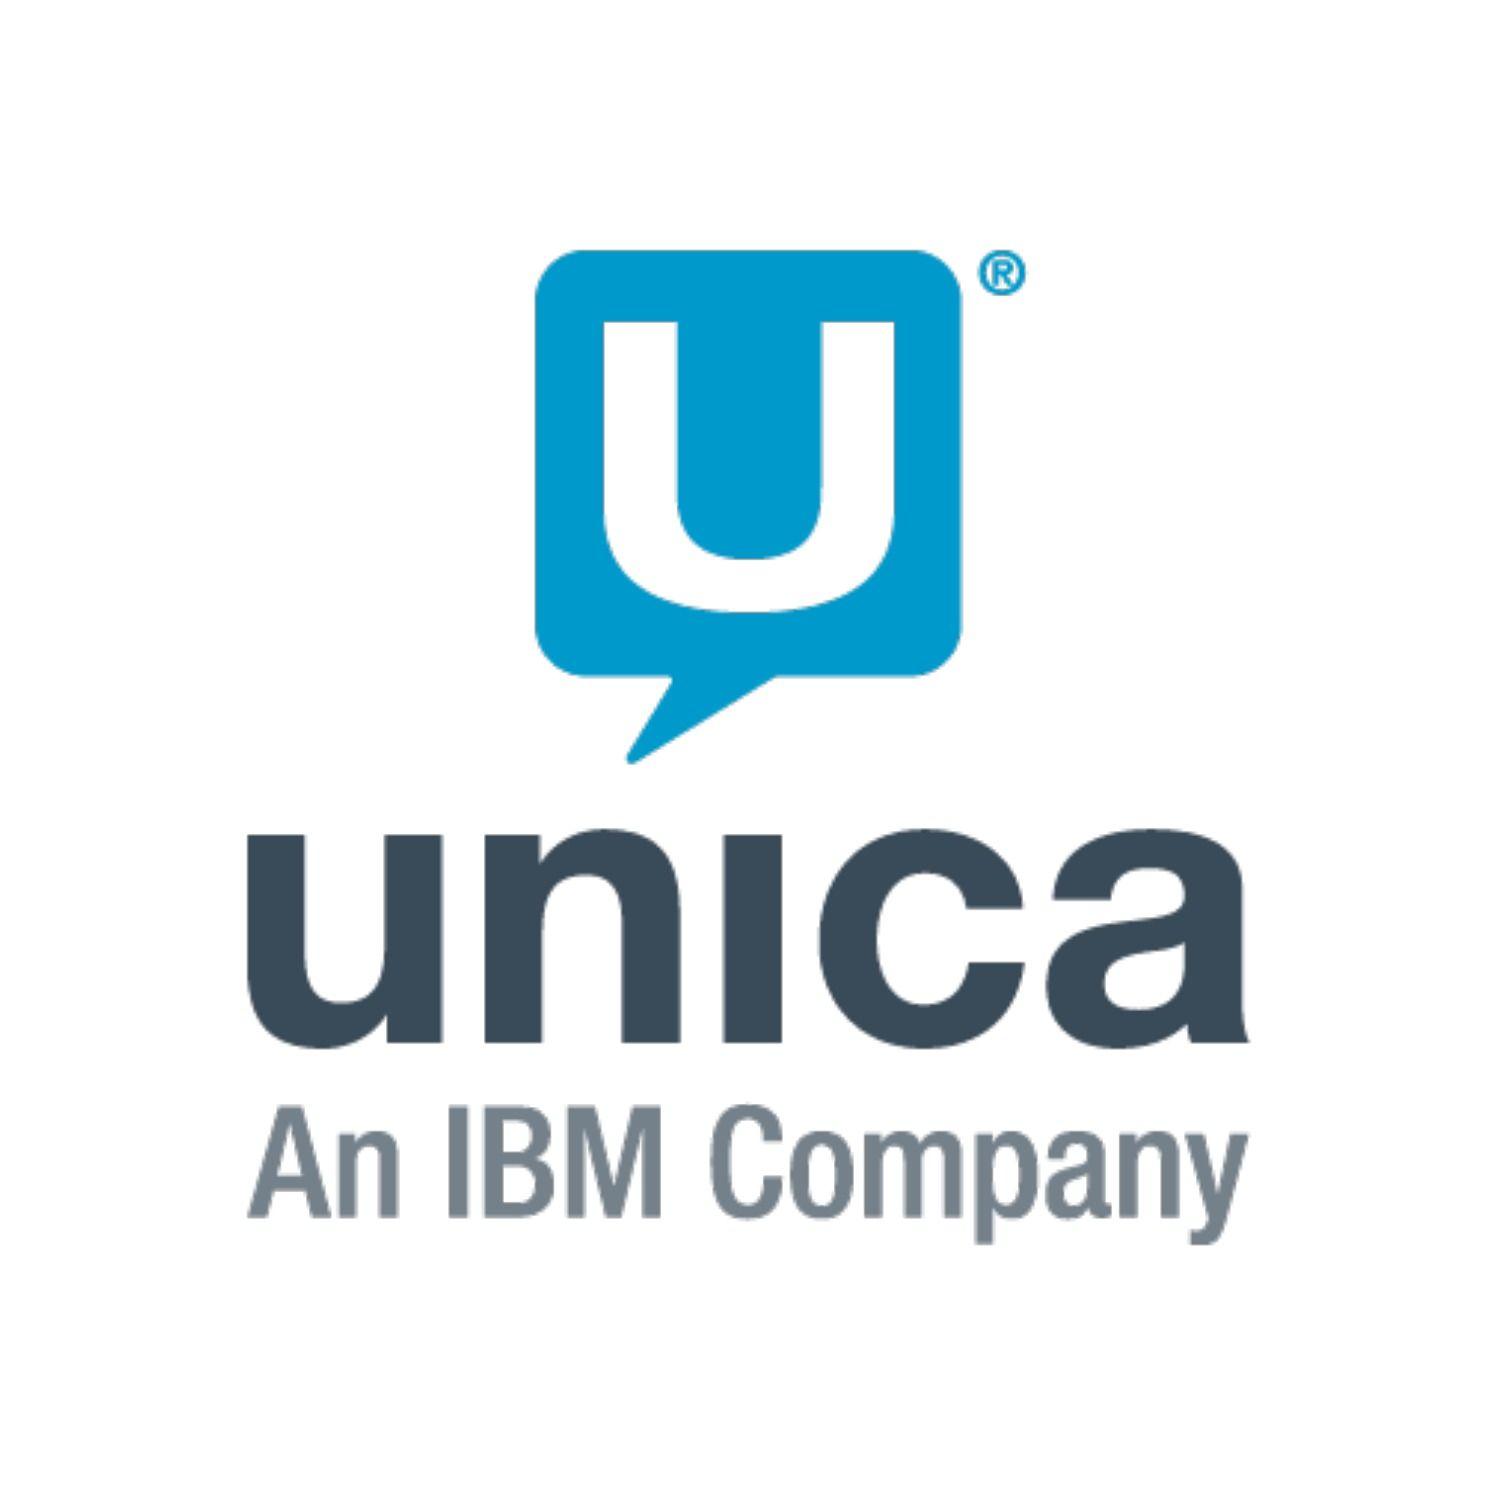 Unica Logo - Unica/ IBM